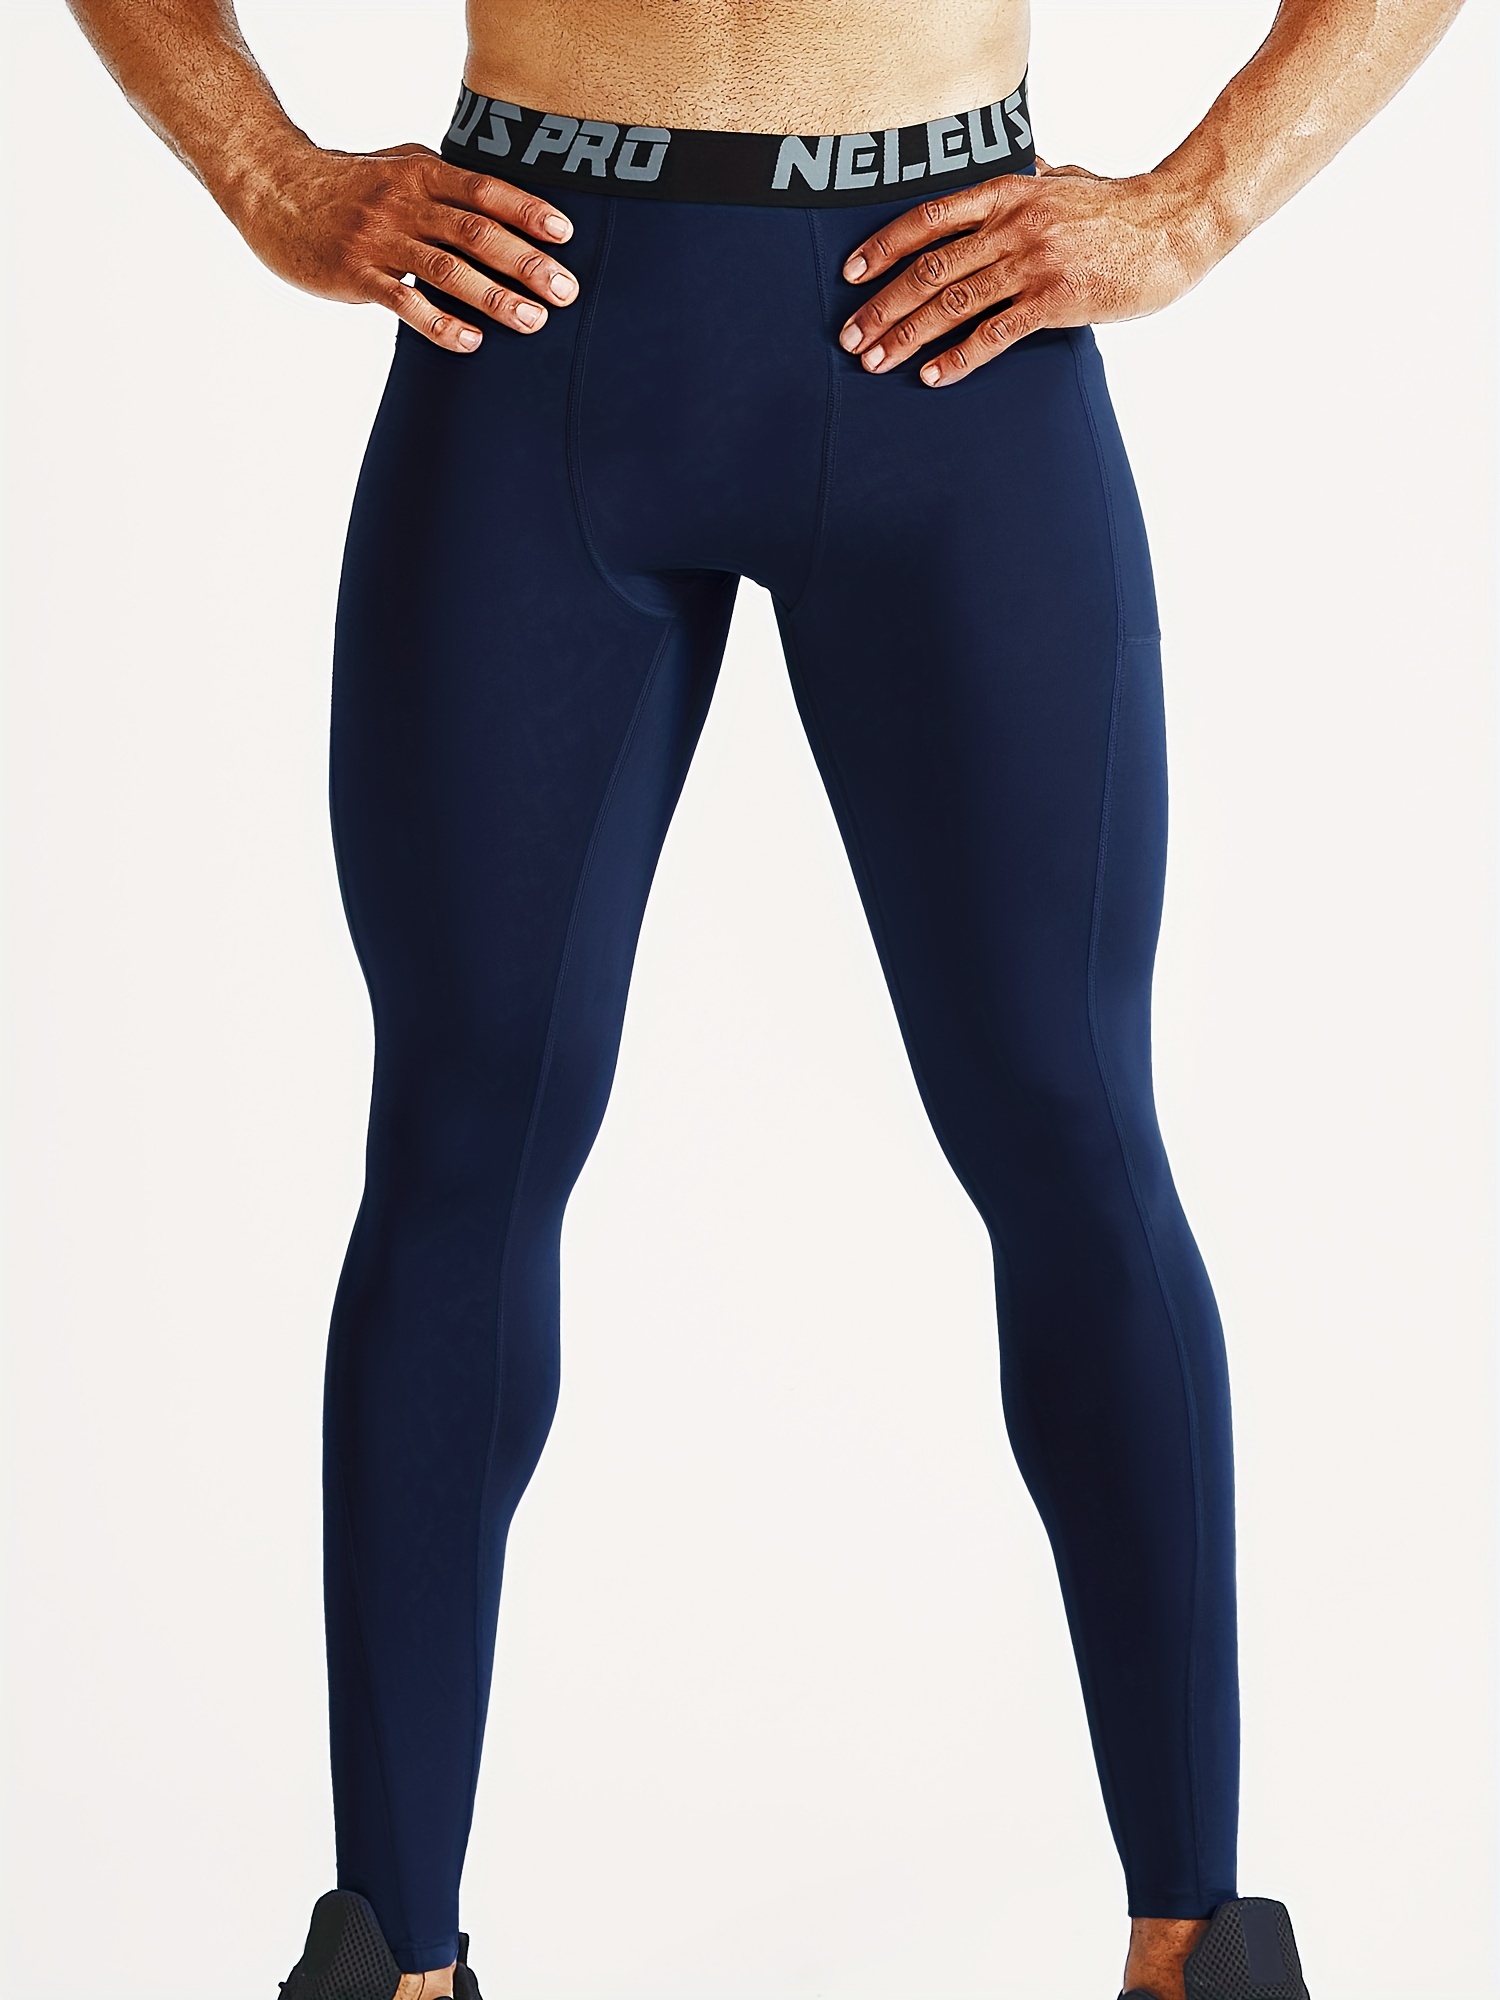 Mens Running Basketball Tights Workout Skin Compression Long Pants Elastic  Waist